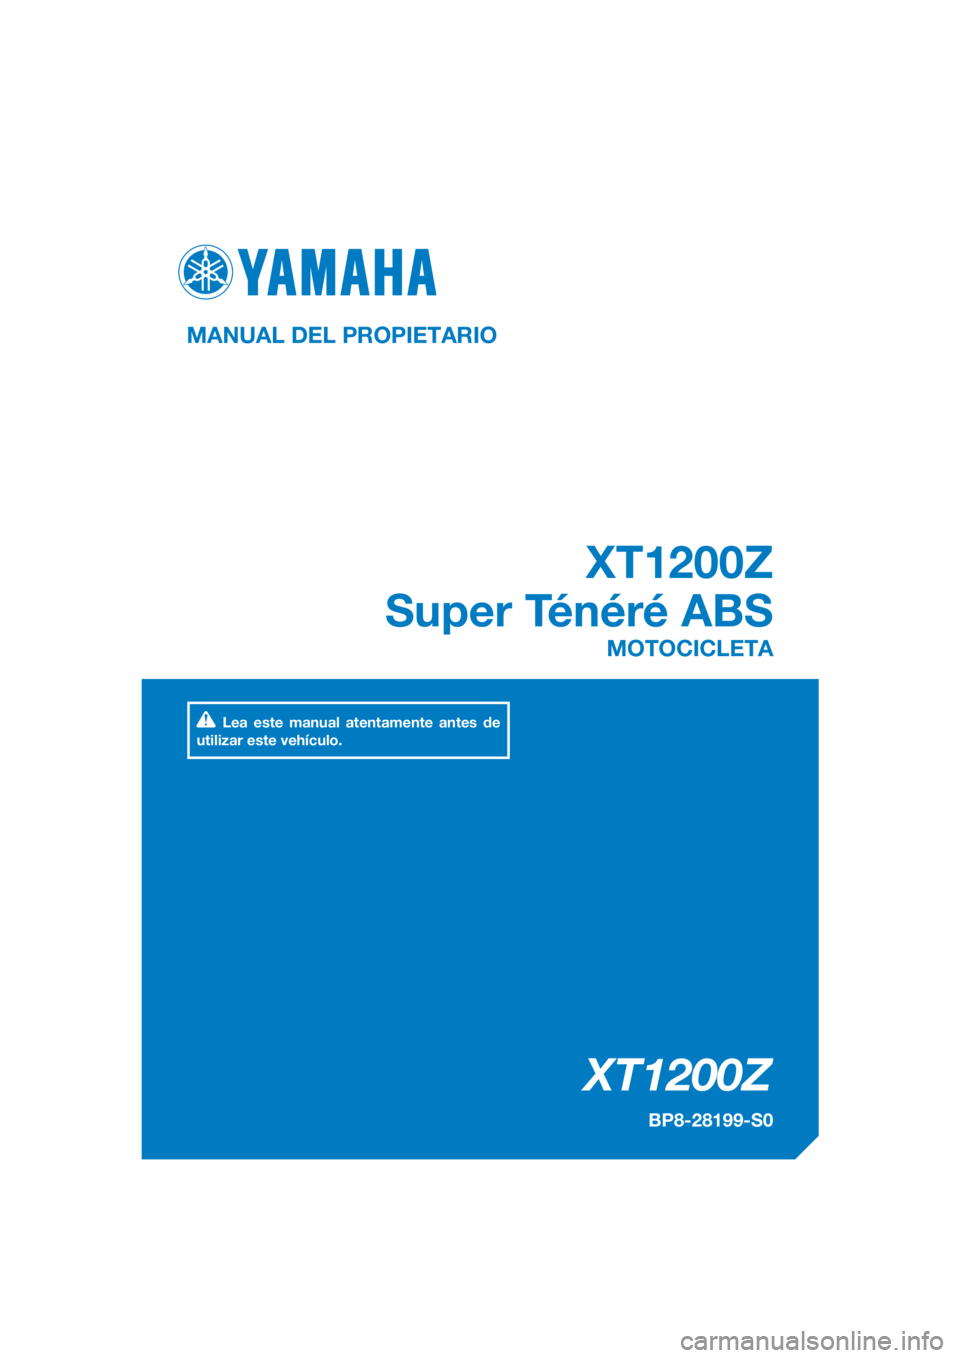 YAMAHA XT1200Z 2017  Manuale de Empleo (in Spanish) DIC183
XT1200Z
XT1200Z
Super Ténéré ABS
MANUAL DEL PROPIETARIO
BP8-28199-S0
MOTOCICLETA
Lea este manual atentamente antes de 
utilizar este vehículo.
[Spanish  (S)] 